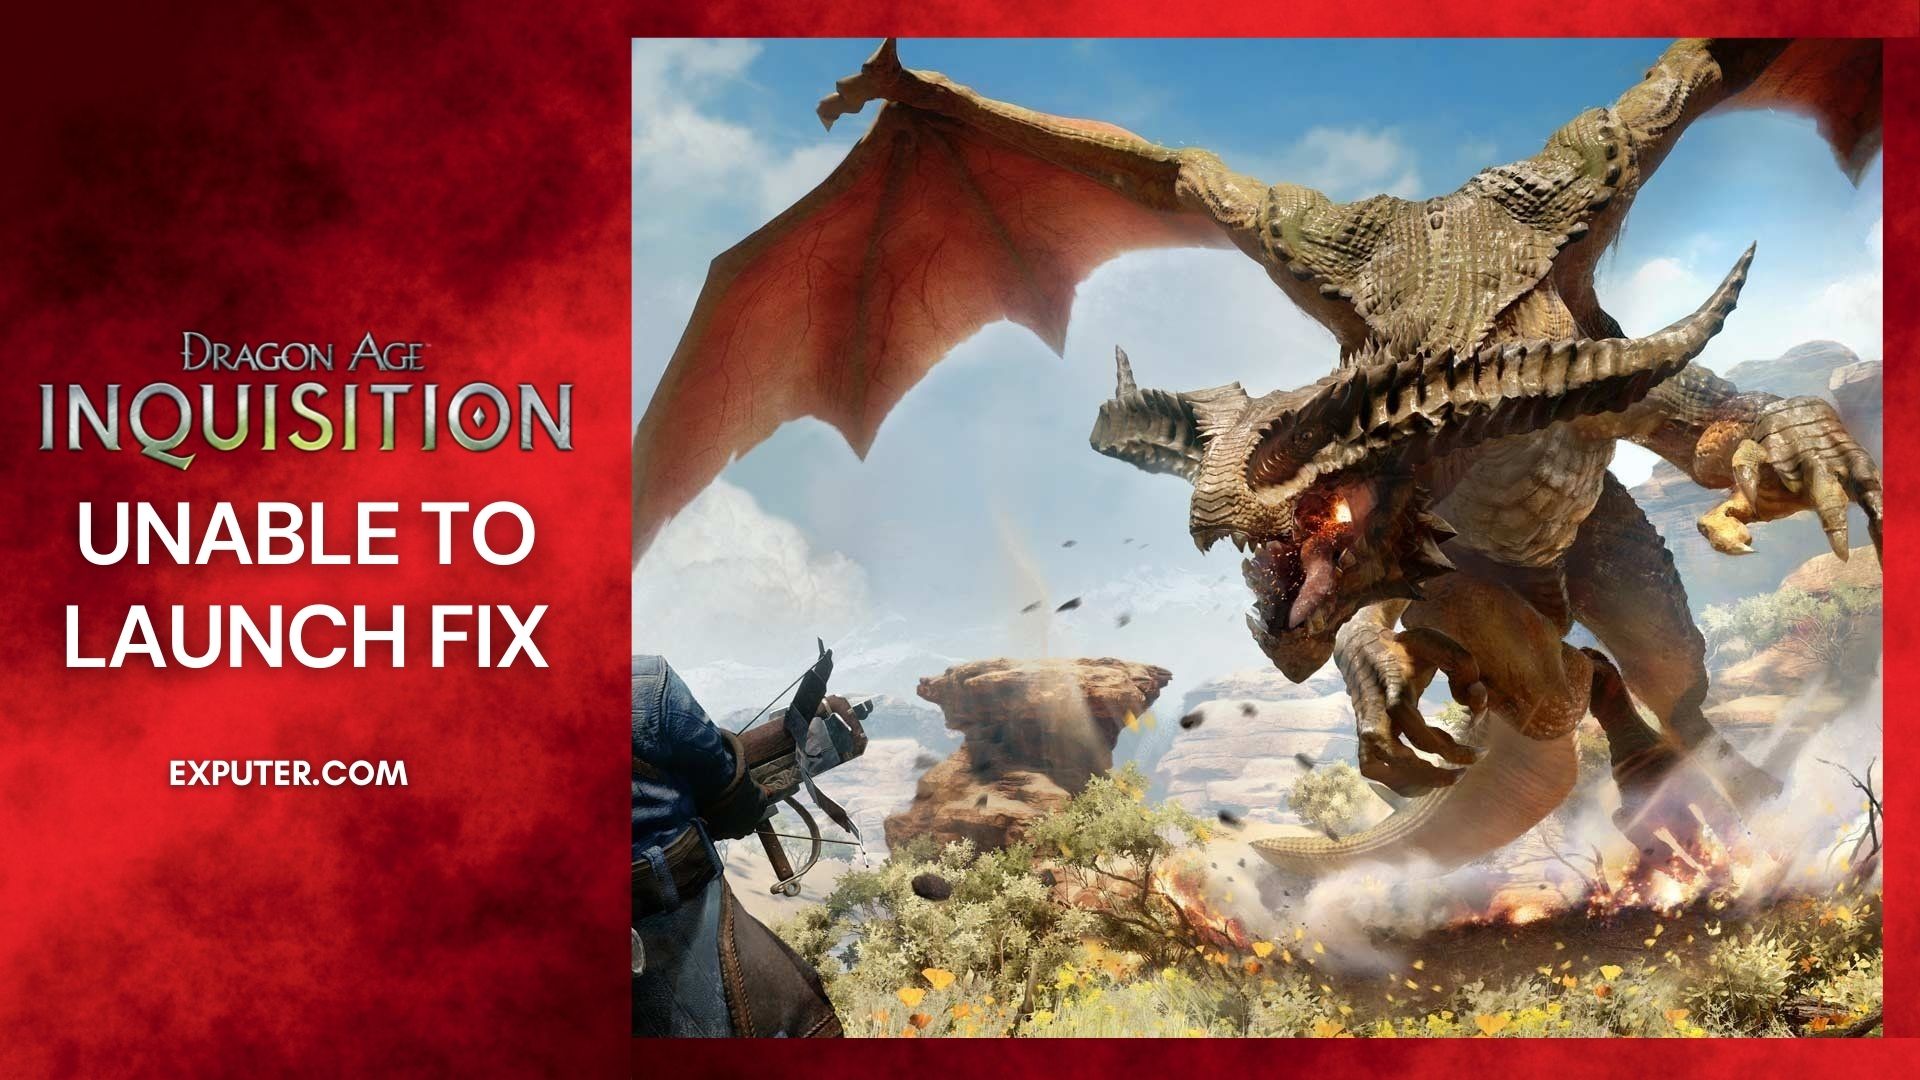 Fix Dragon Age: Inquisition Crashes, Freezes, DirectX Errors & More